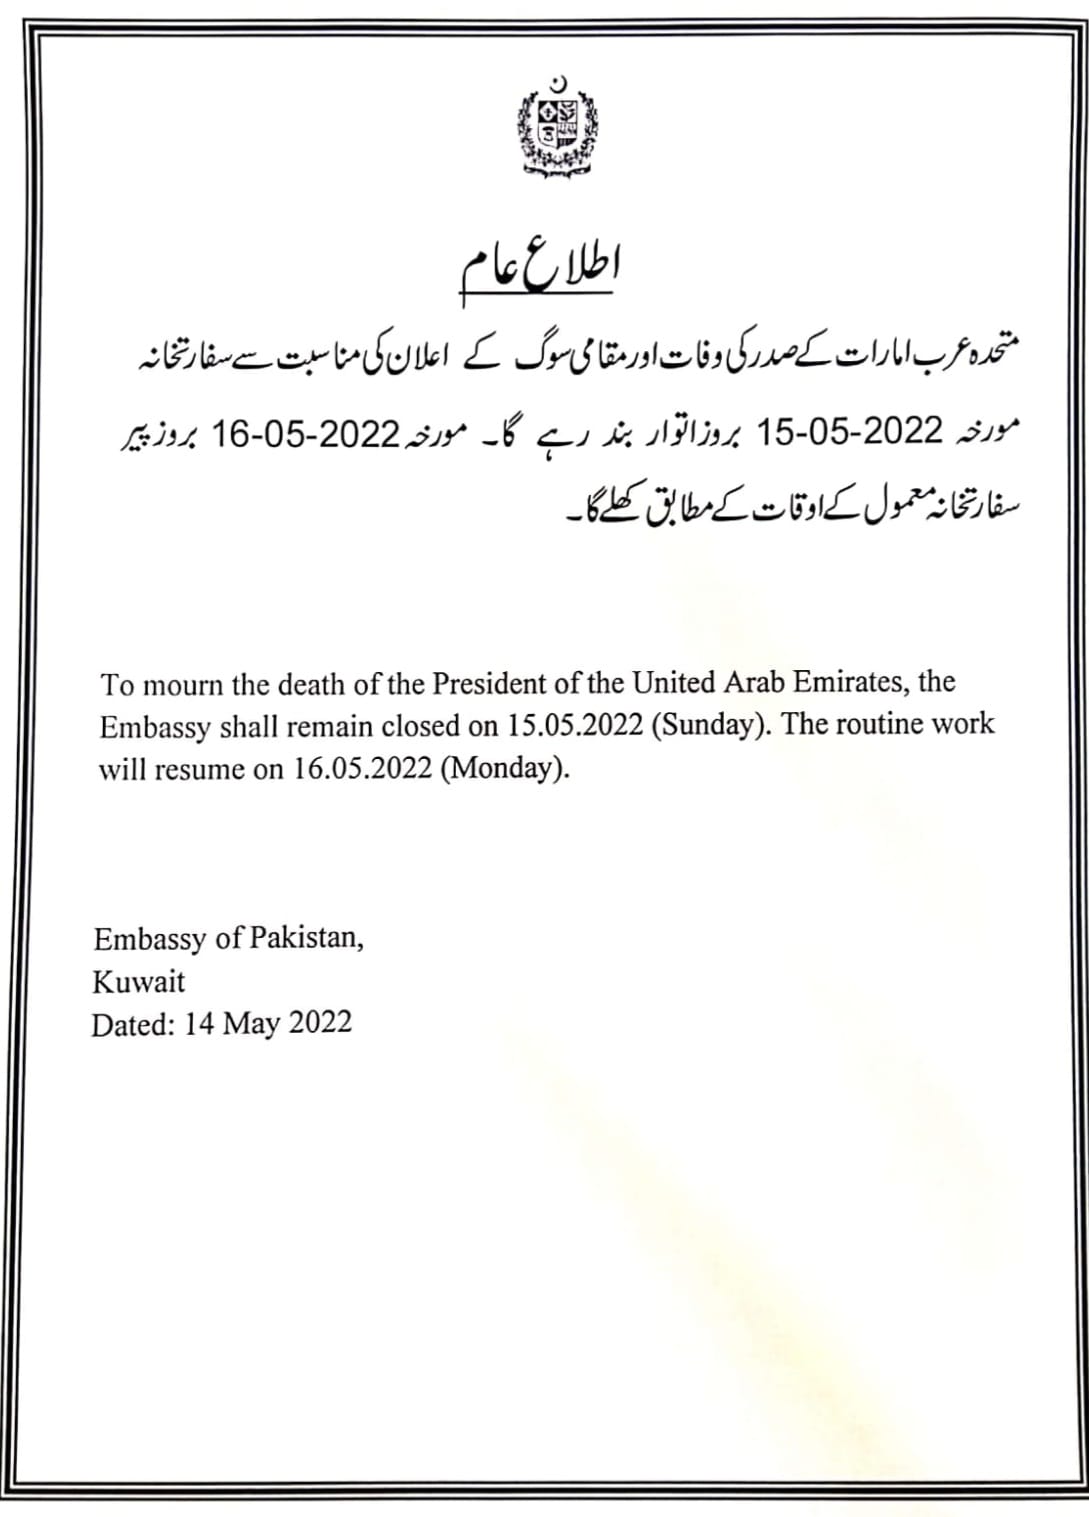 http://pakistanisinkuwait.com/images/embassy15-may-2022.jpg